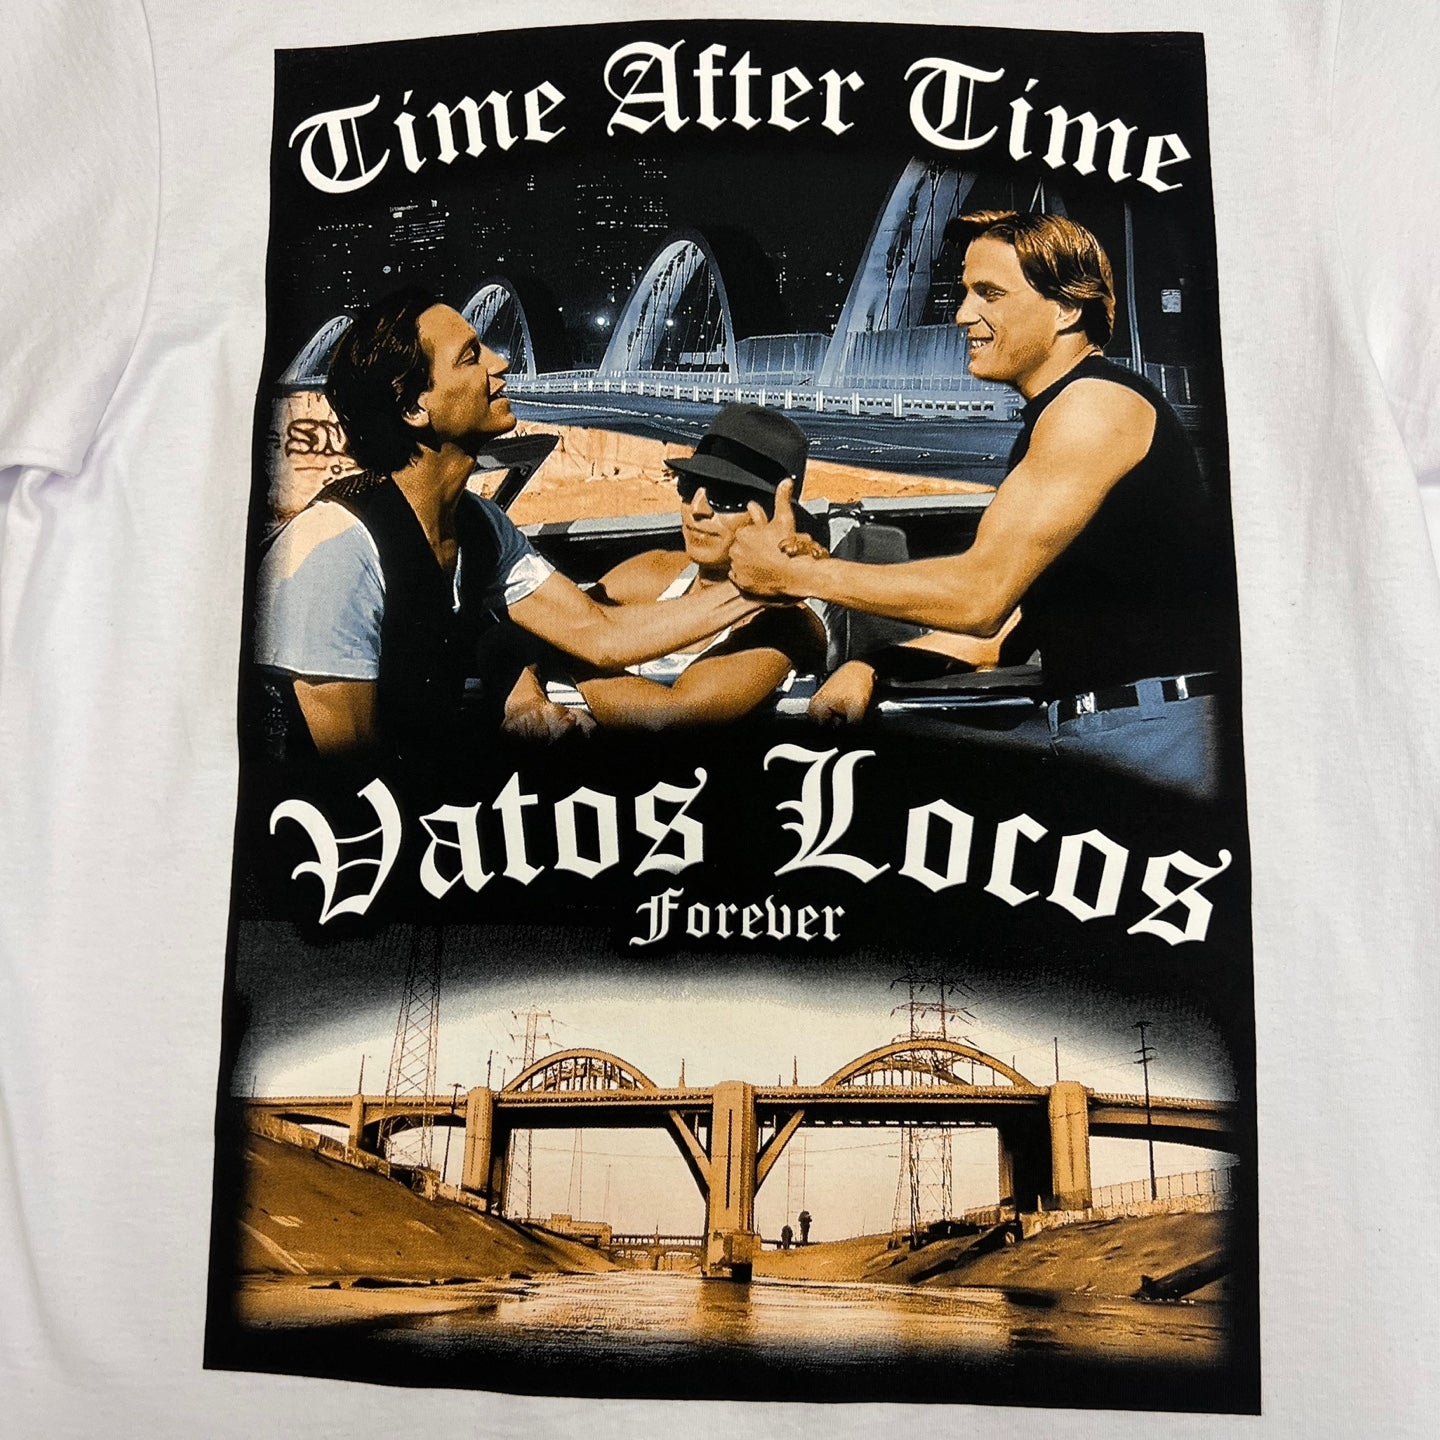 BILLIONAIRE Time After Time Vatos Locos Graphic T-Shirt